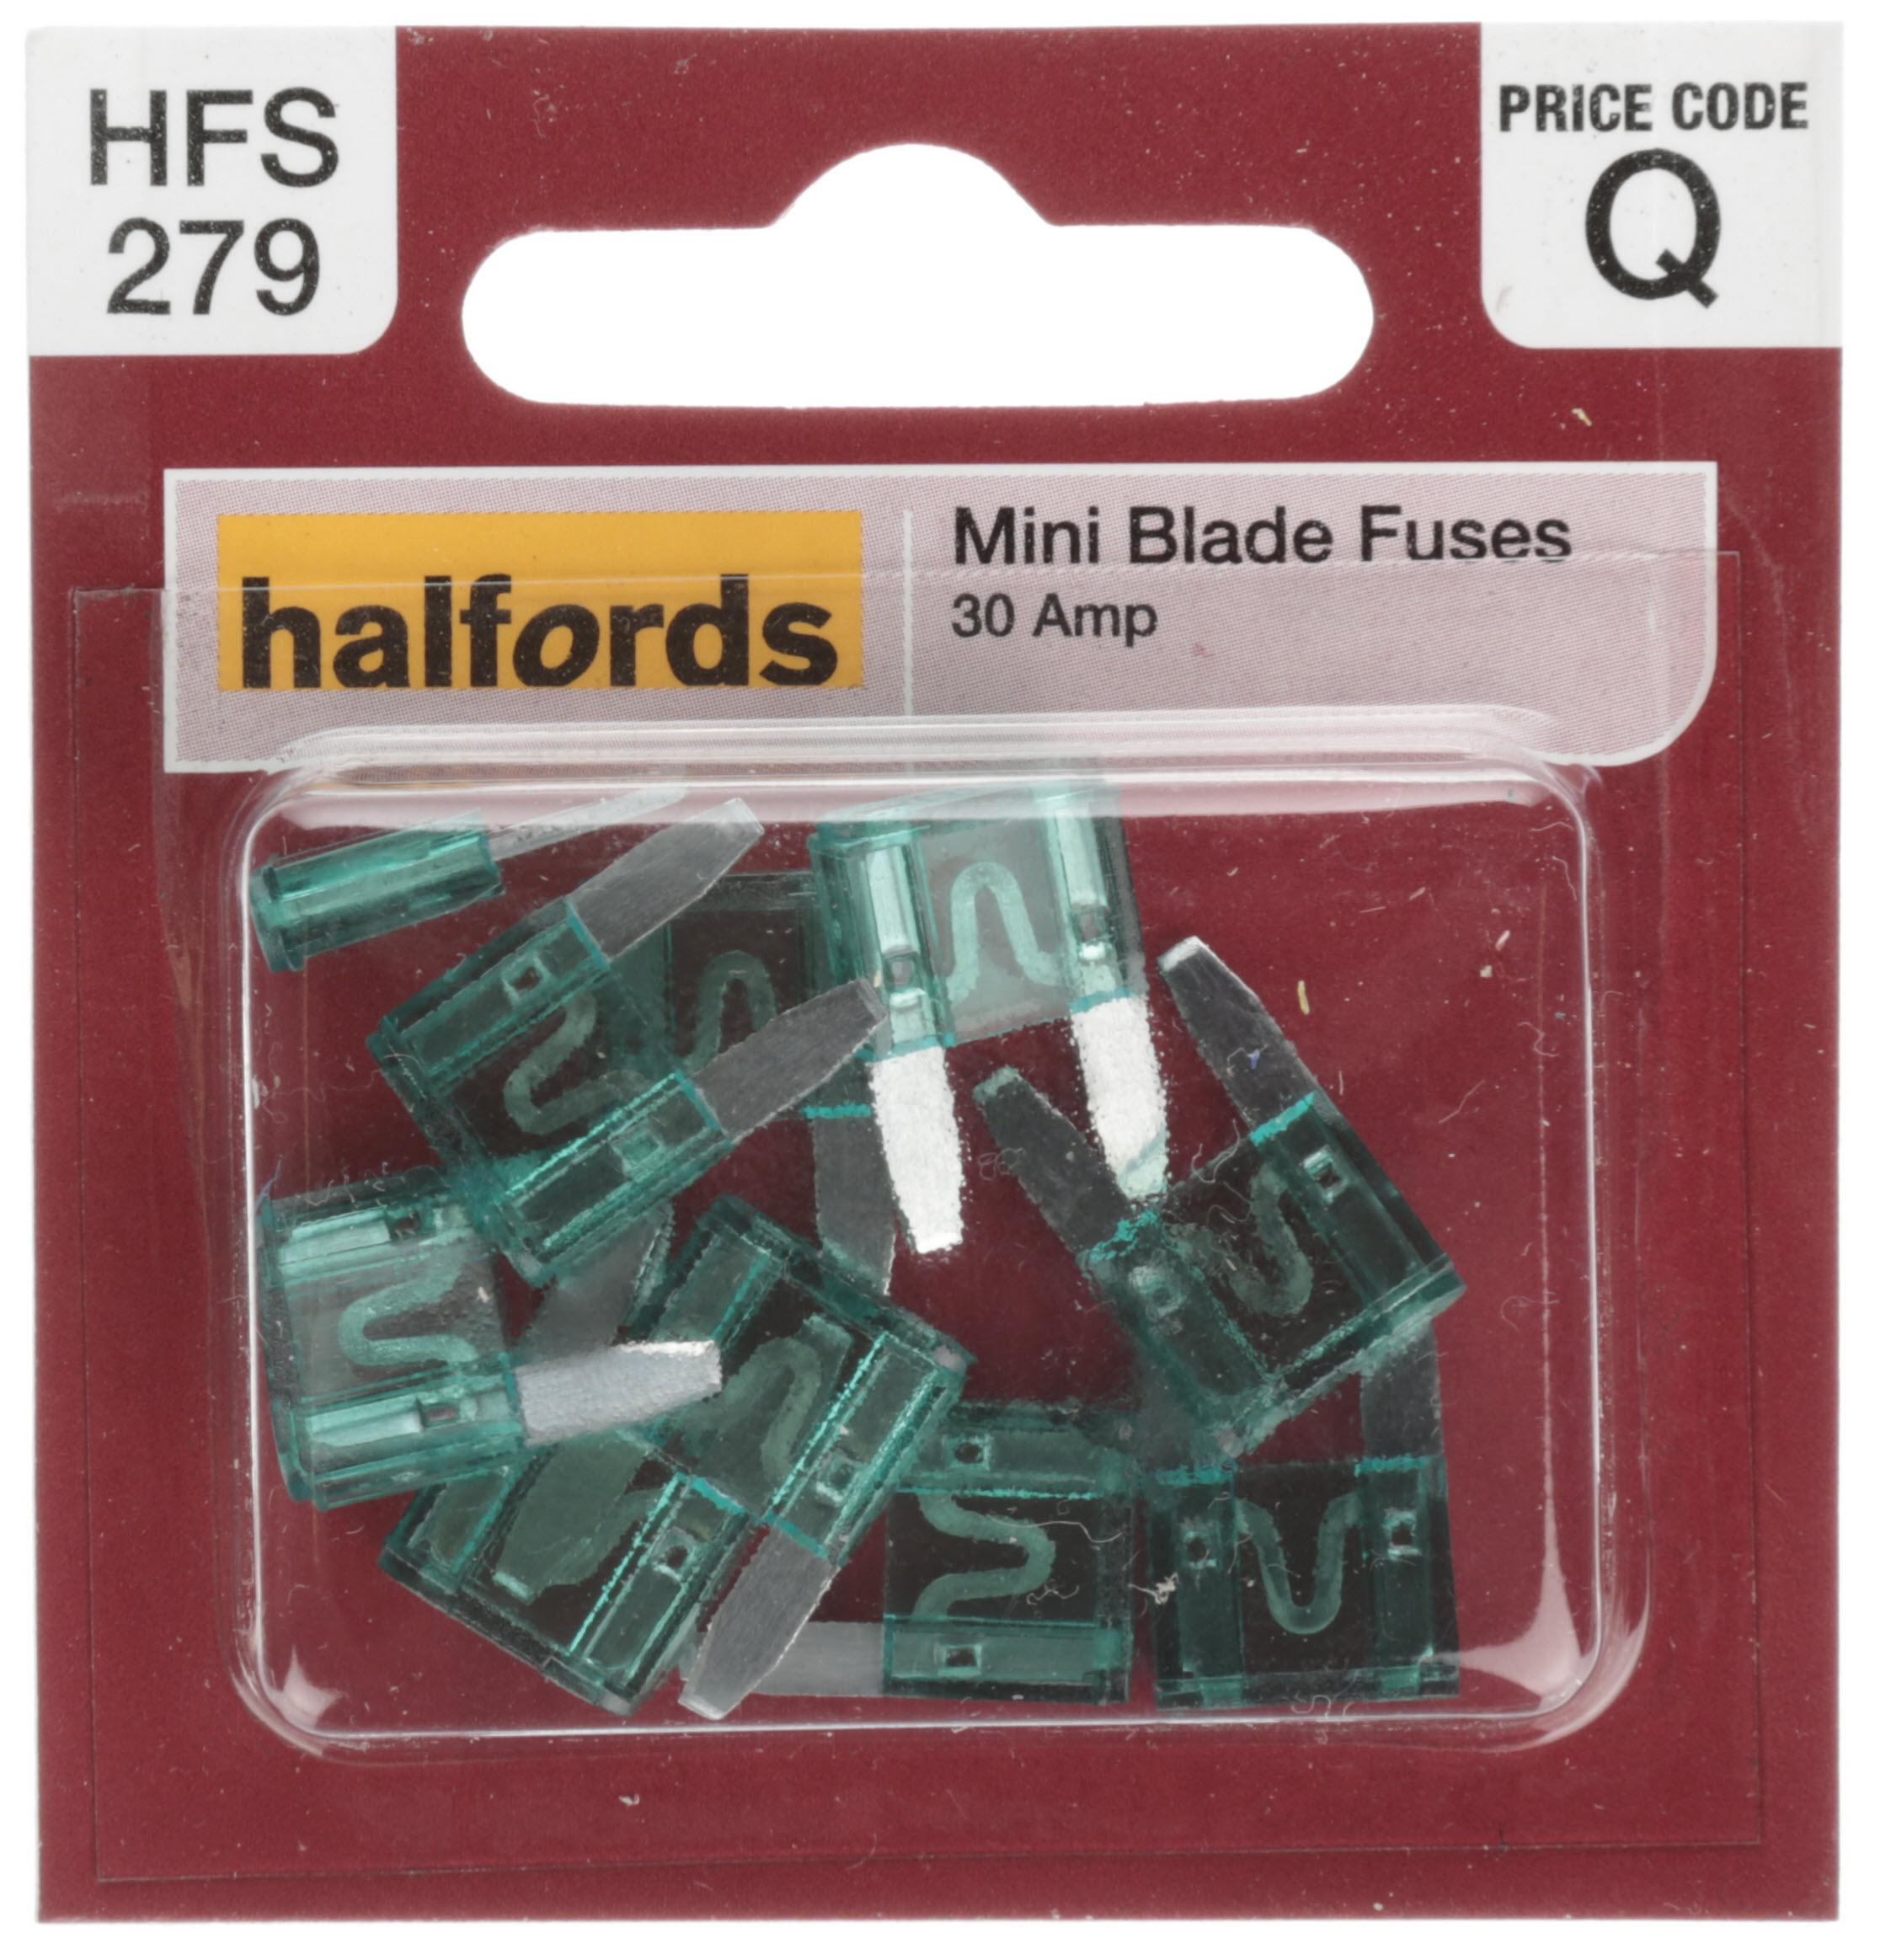 Halfords Mini Blade Fuses 30 Amp (Hfs279)